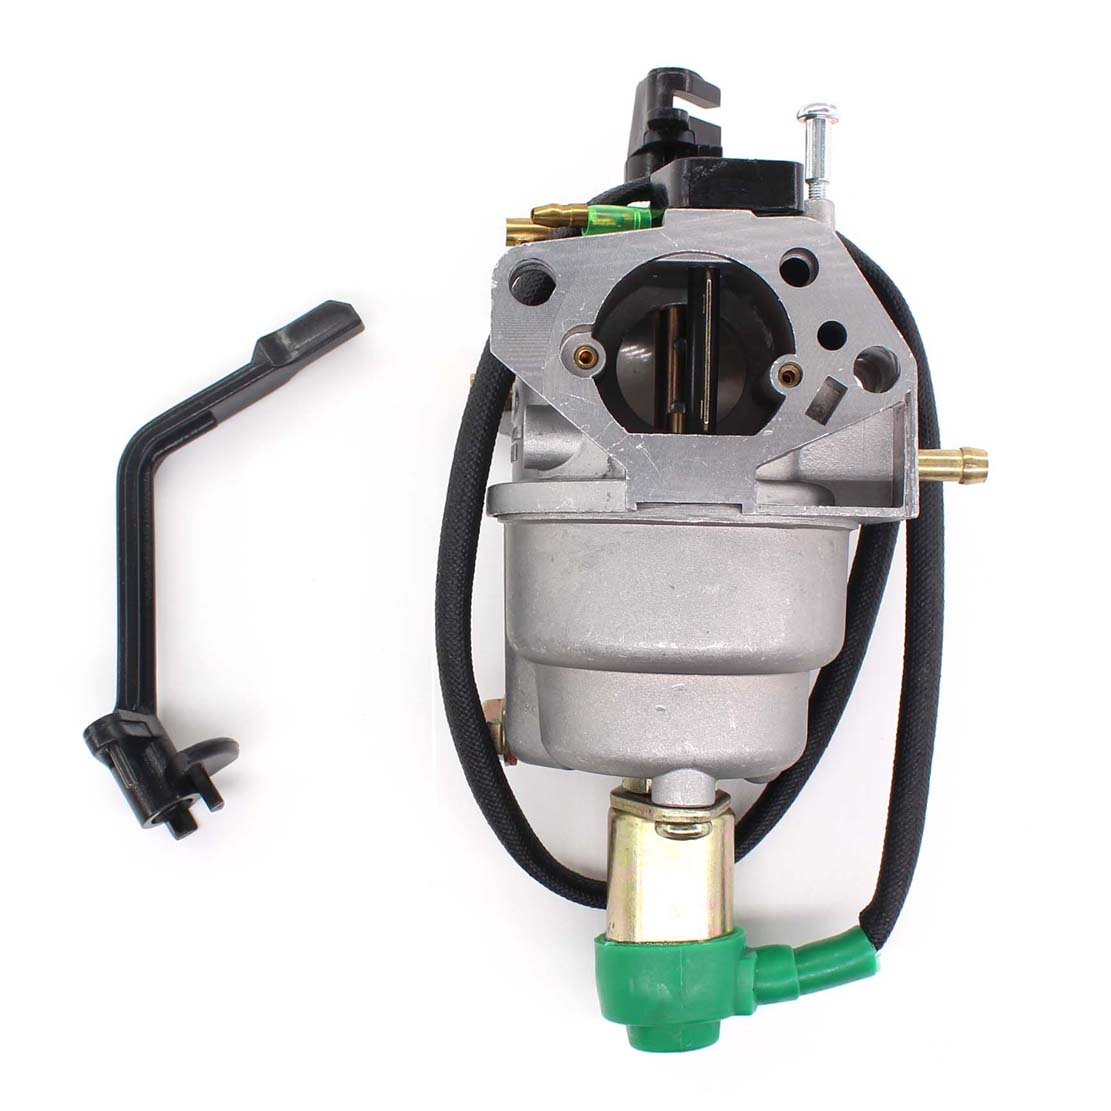 USPEEDA Carburetor Fuel Filter Gasket for Powermate PC0105007 PMC105007 PM0105007 5000 Watts 389CC Generator